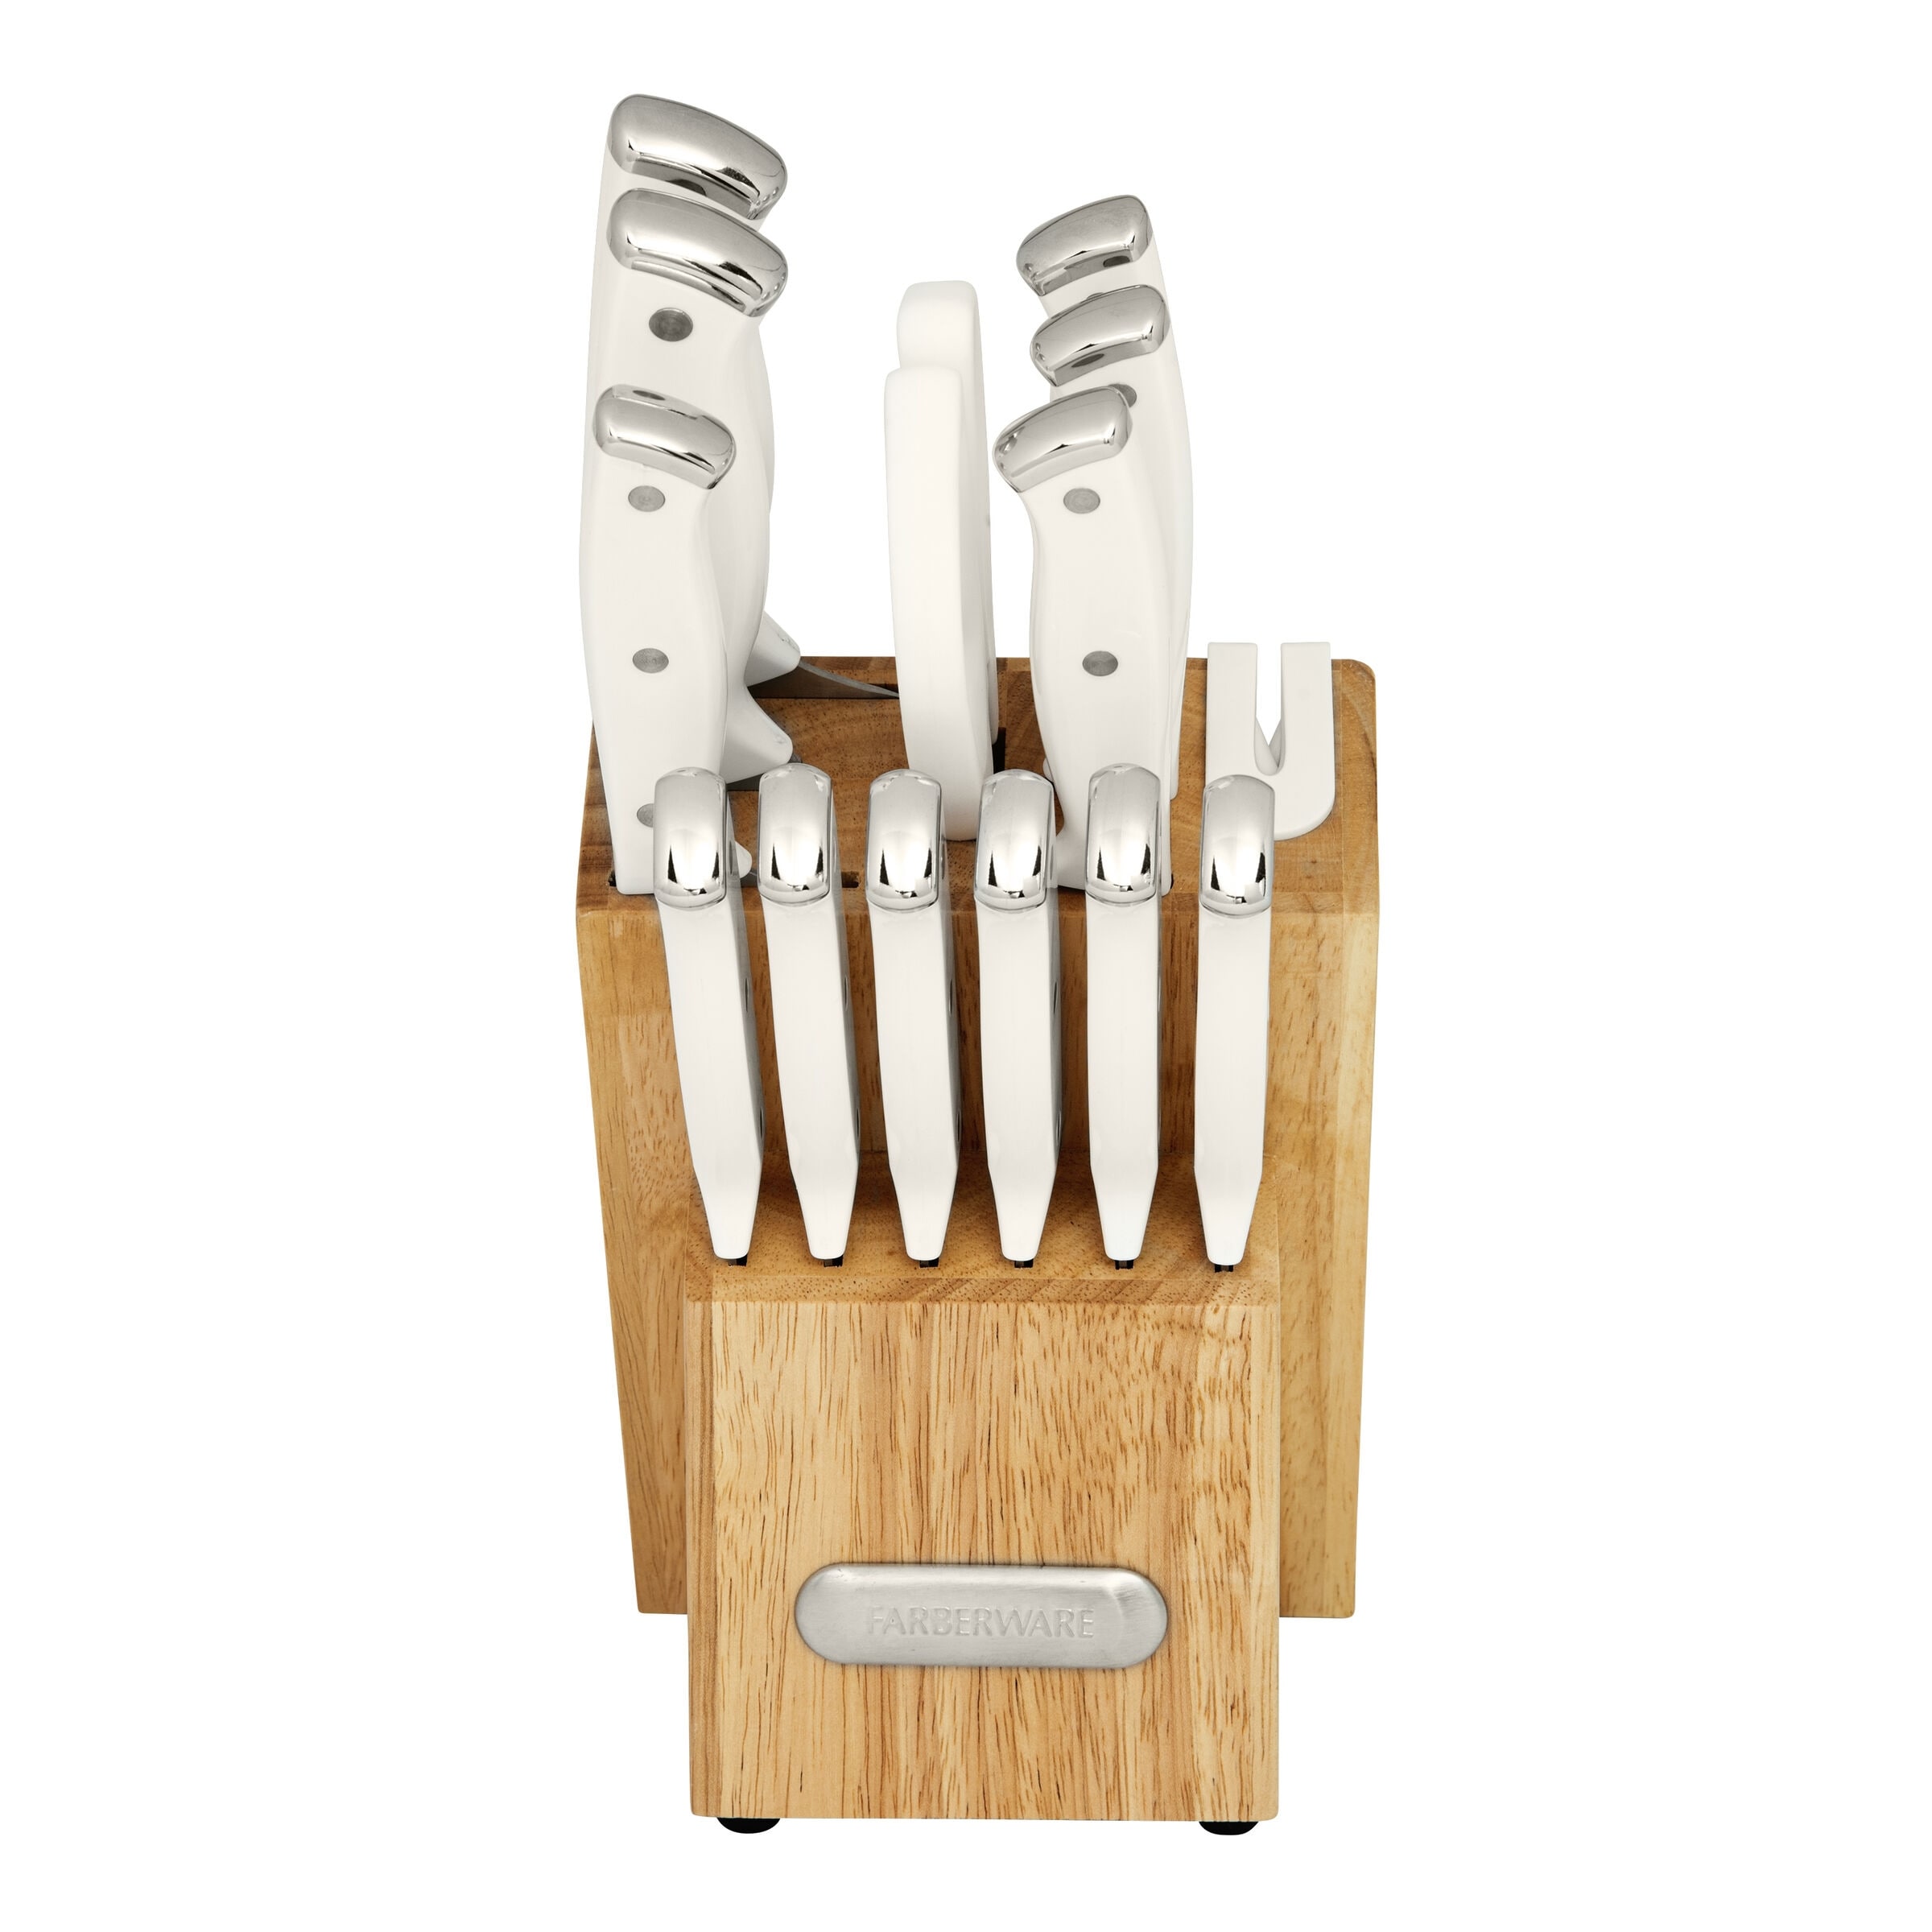 Farberware Edgekeeper 15-Piece Cutlery Set